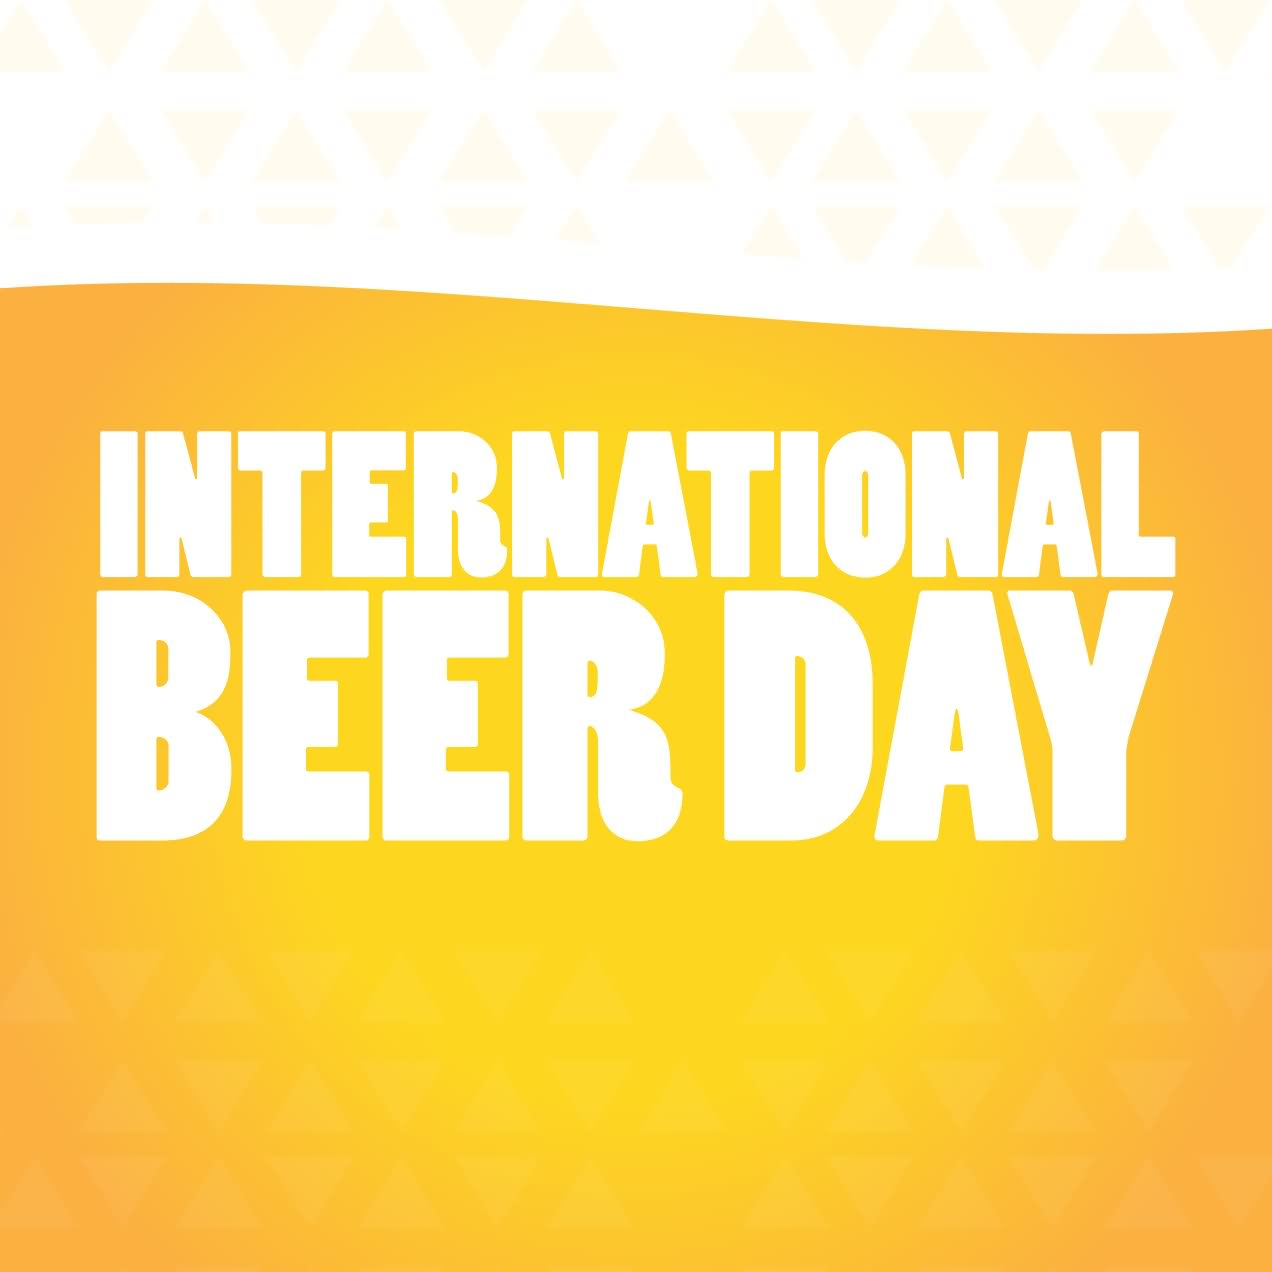 Wish You Happy International Beer Day